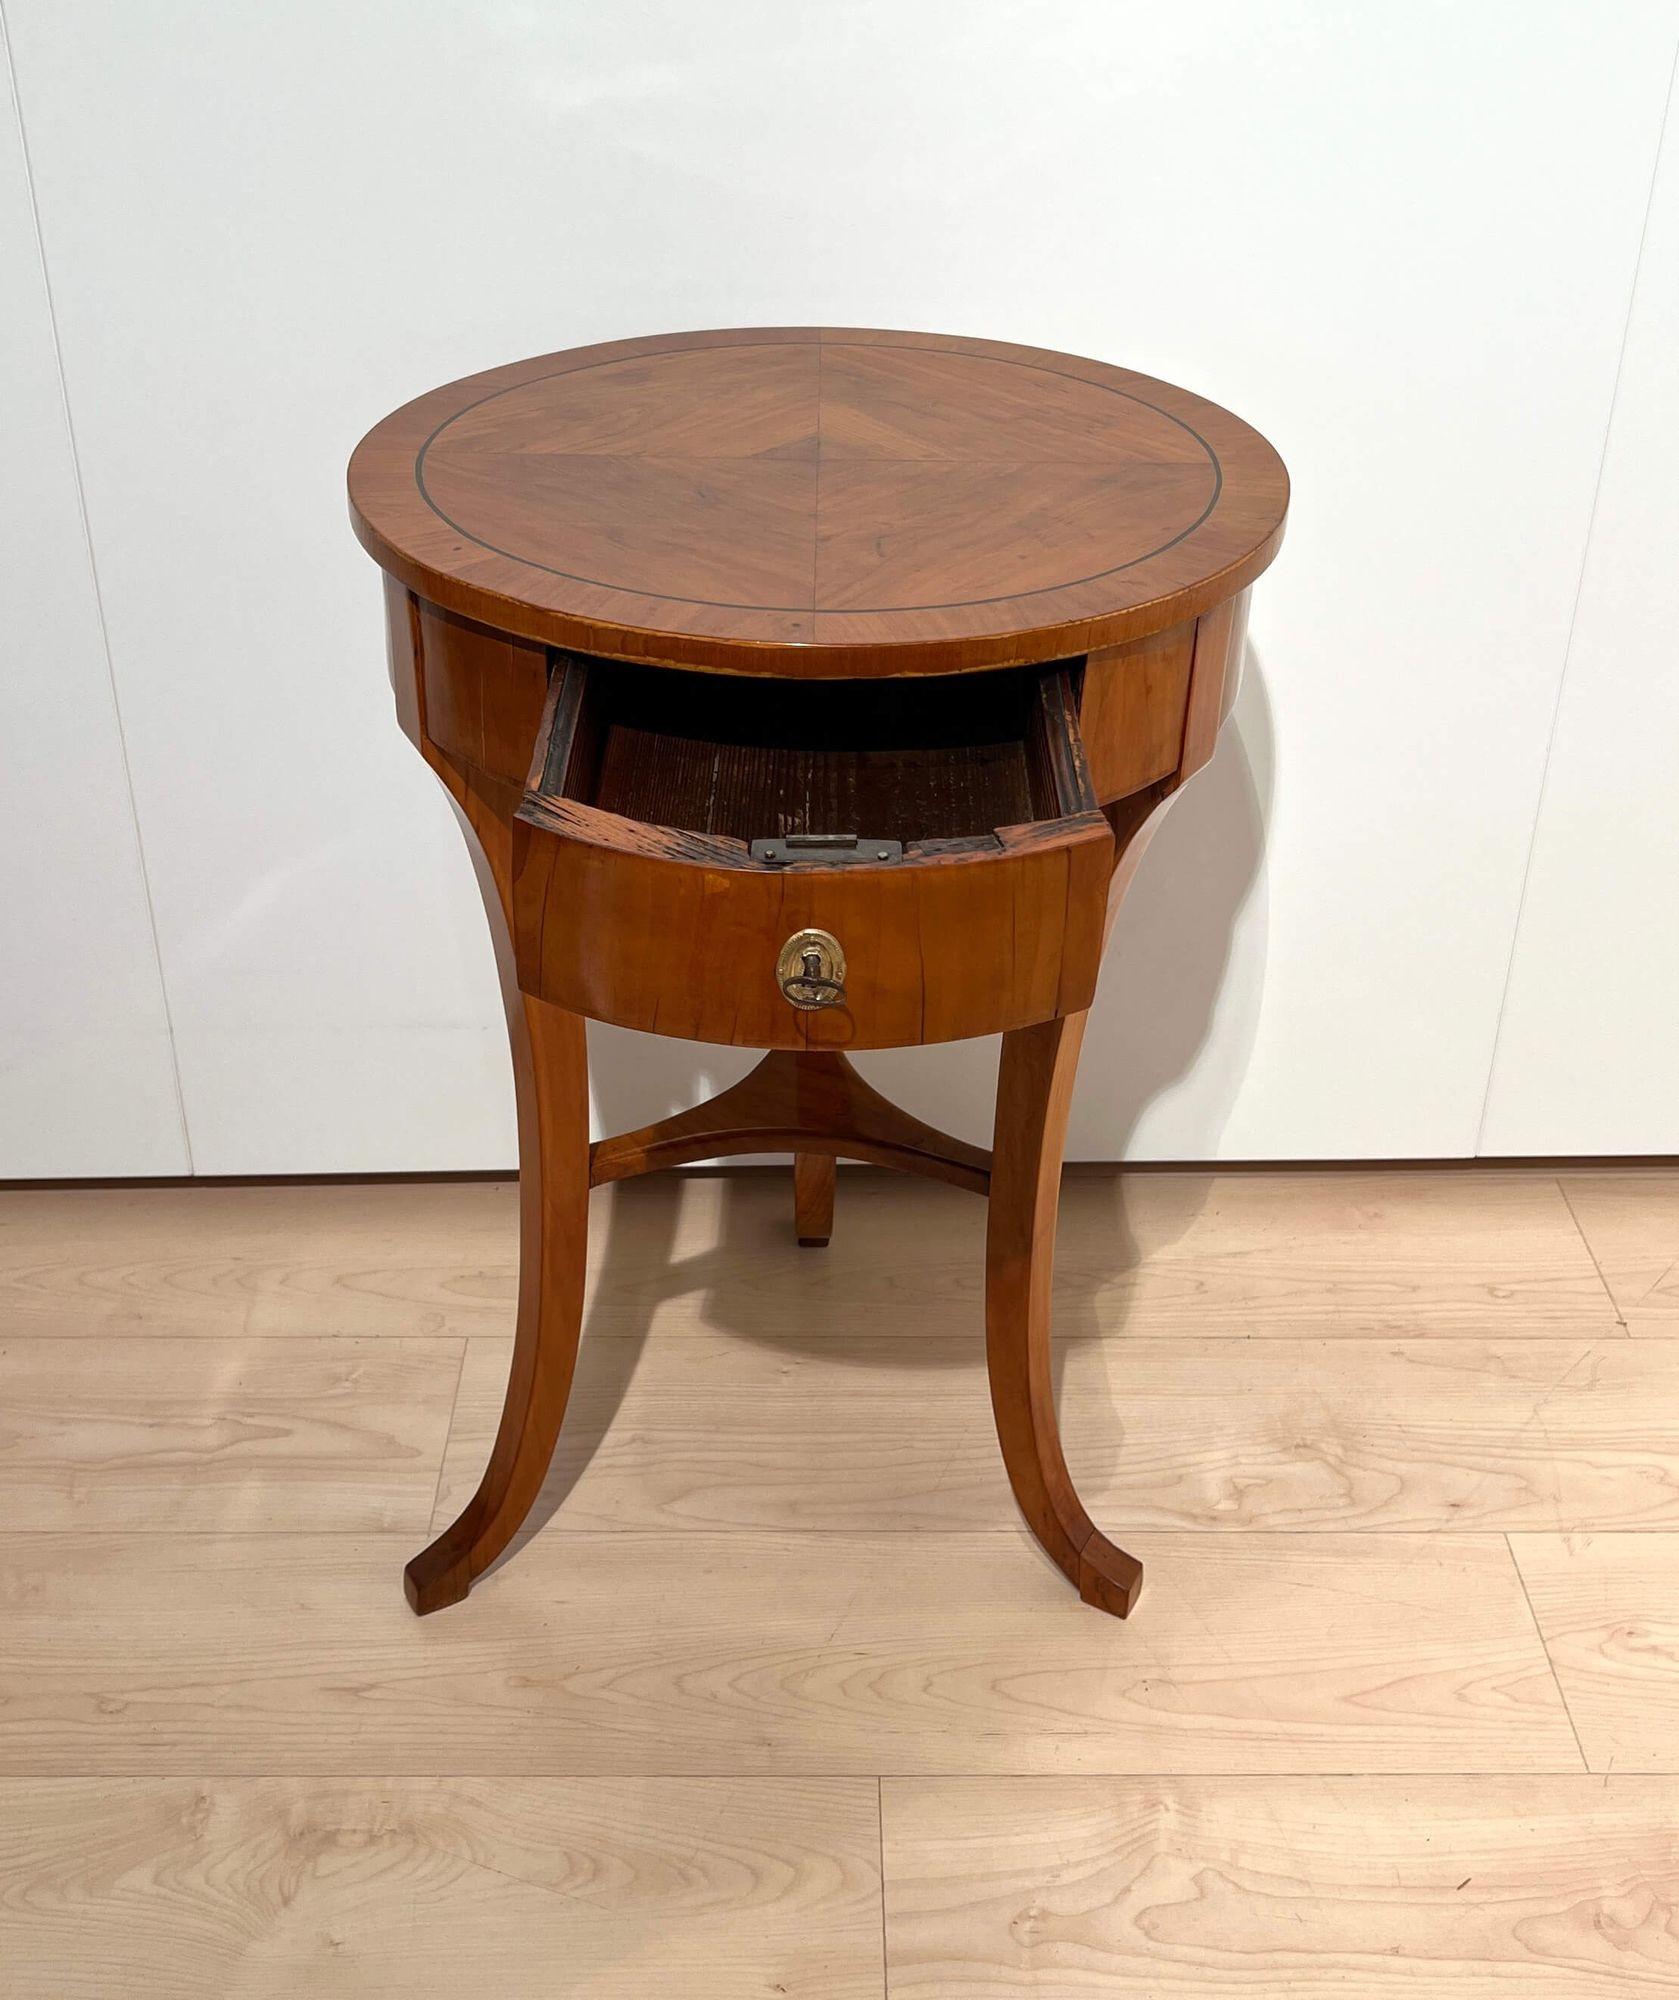 Polished Round Three-Legged Biedermeier Side Table, Walnut, South Germany, circa 1820